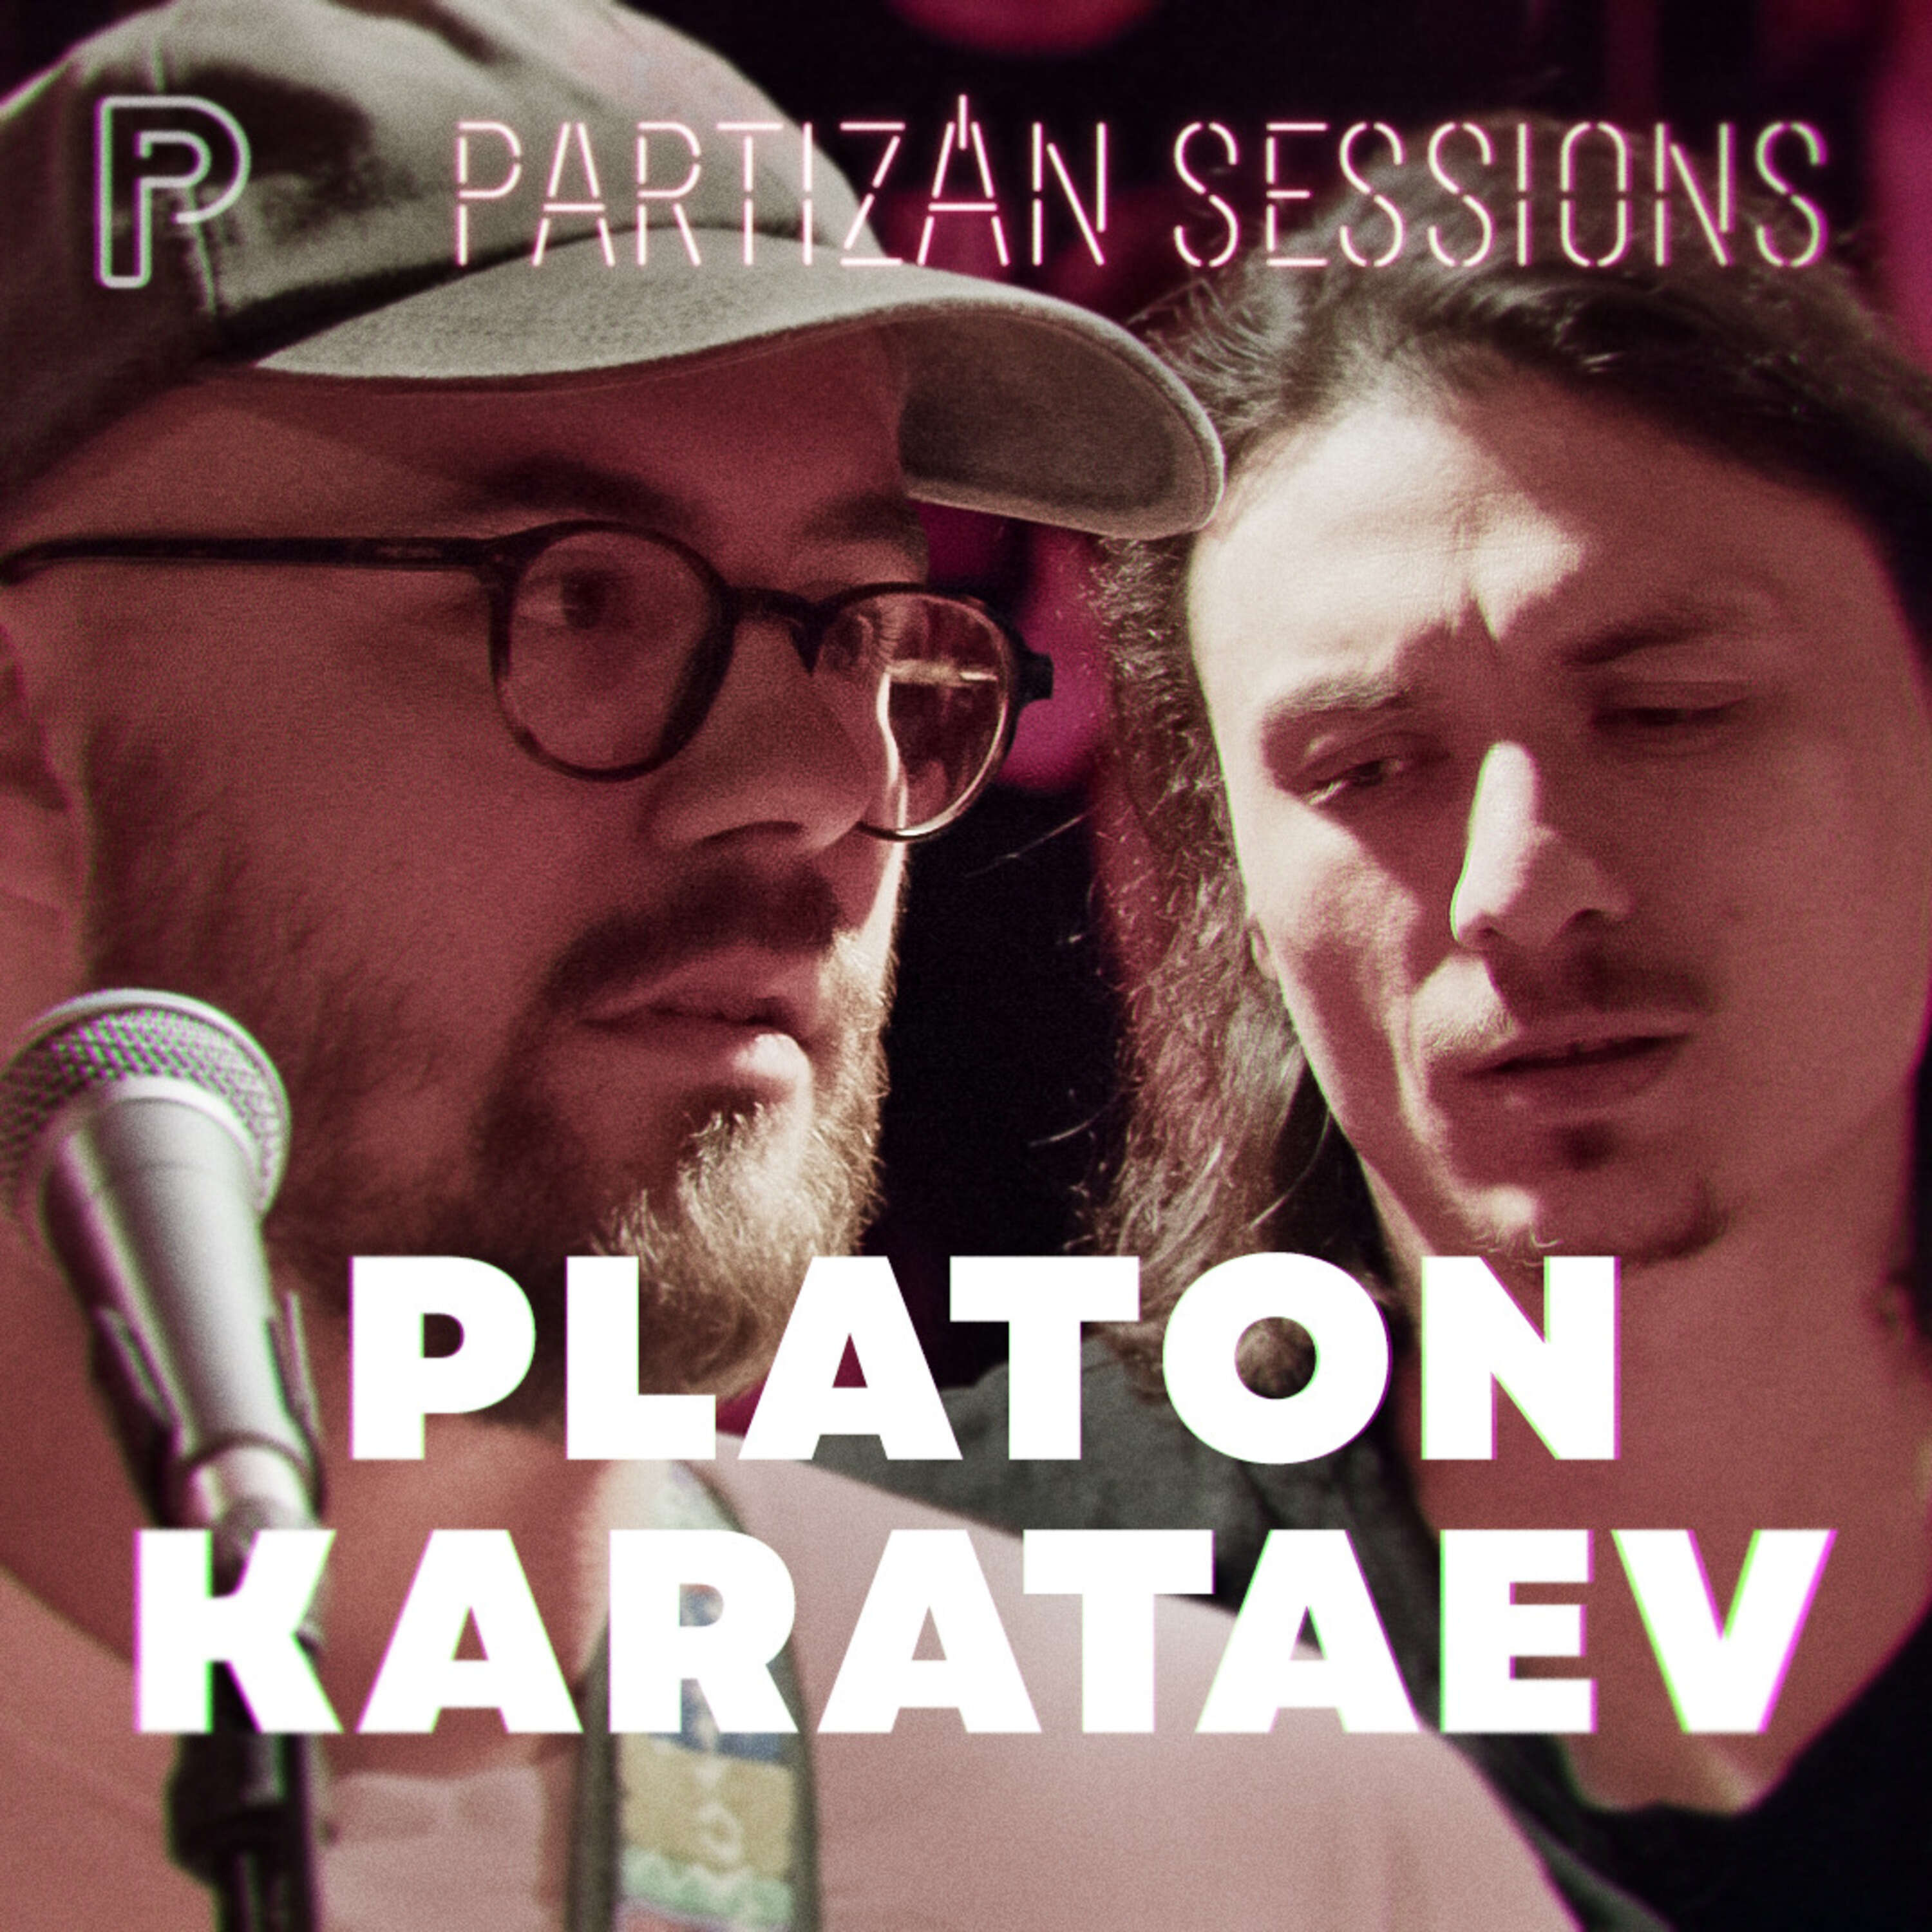 Platon Karatev - Lassú madár | Partizán Sessions